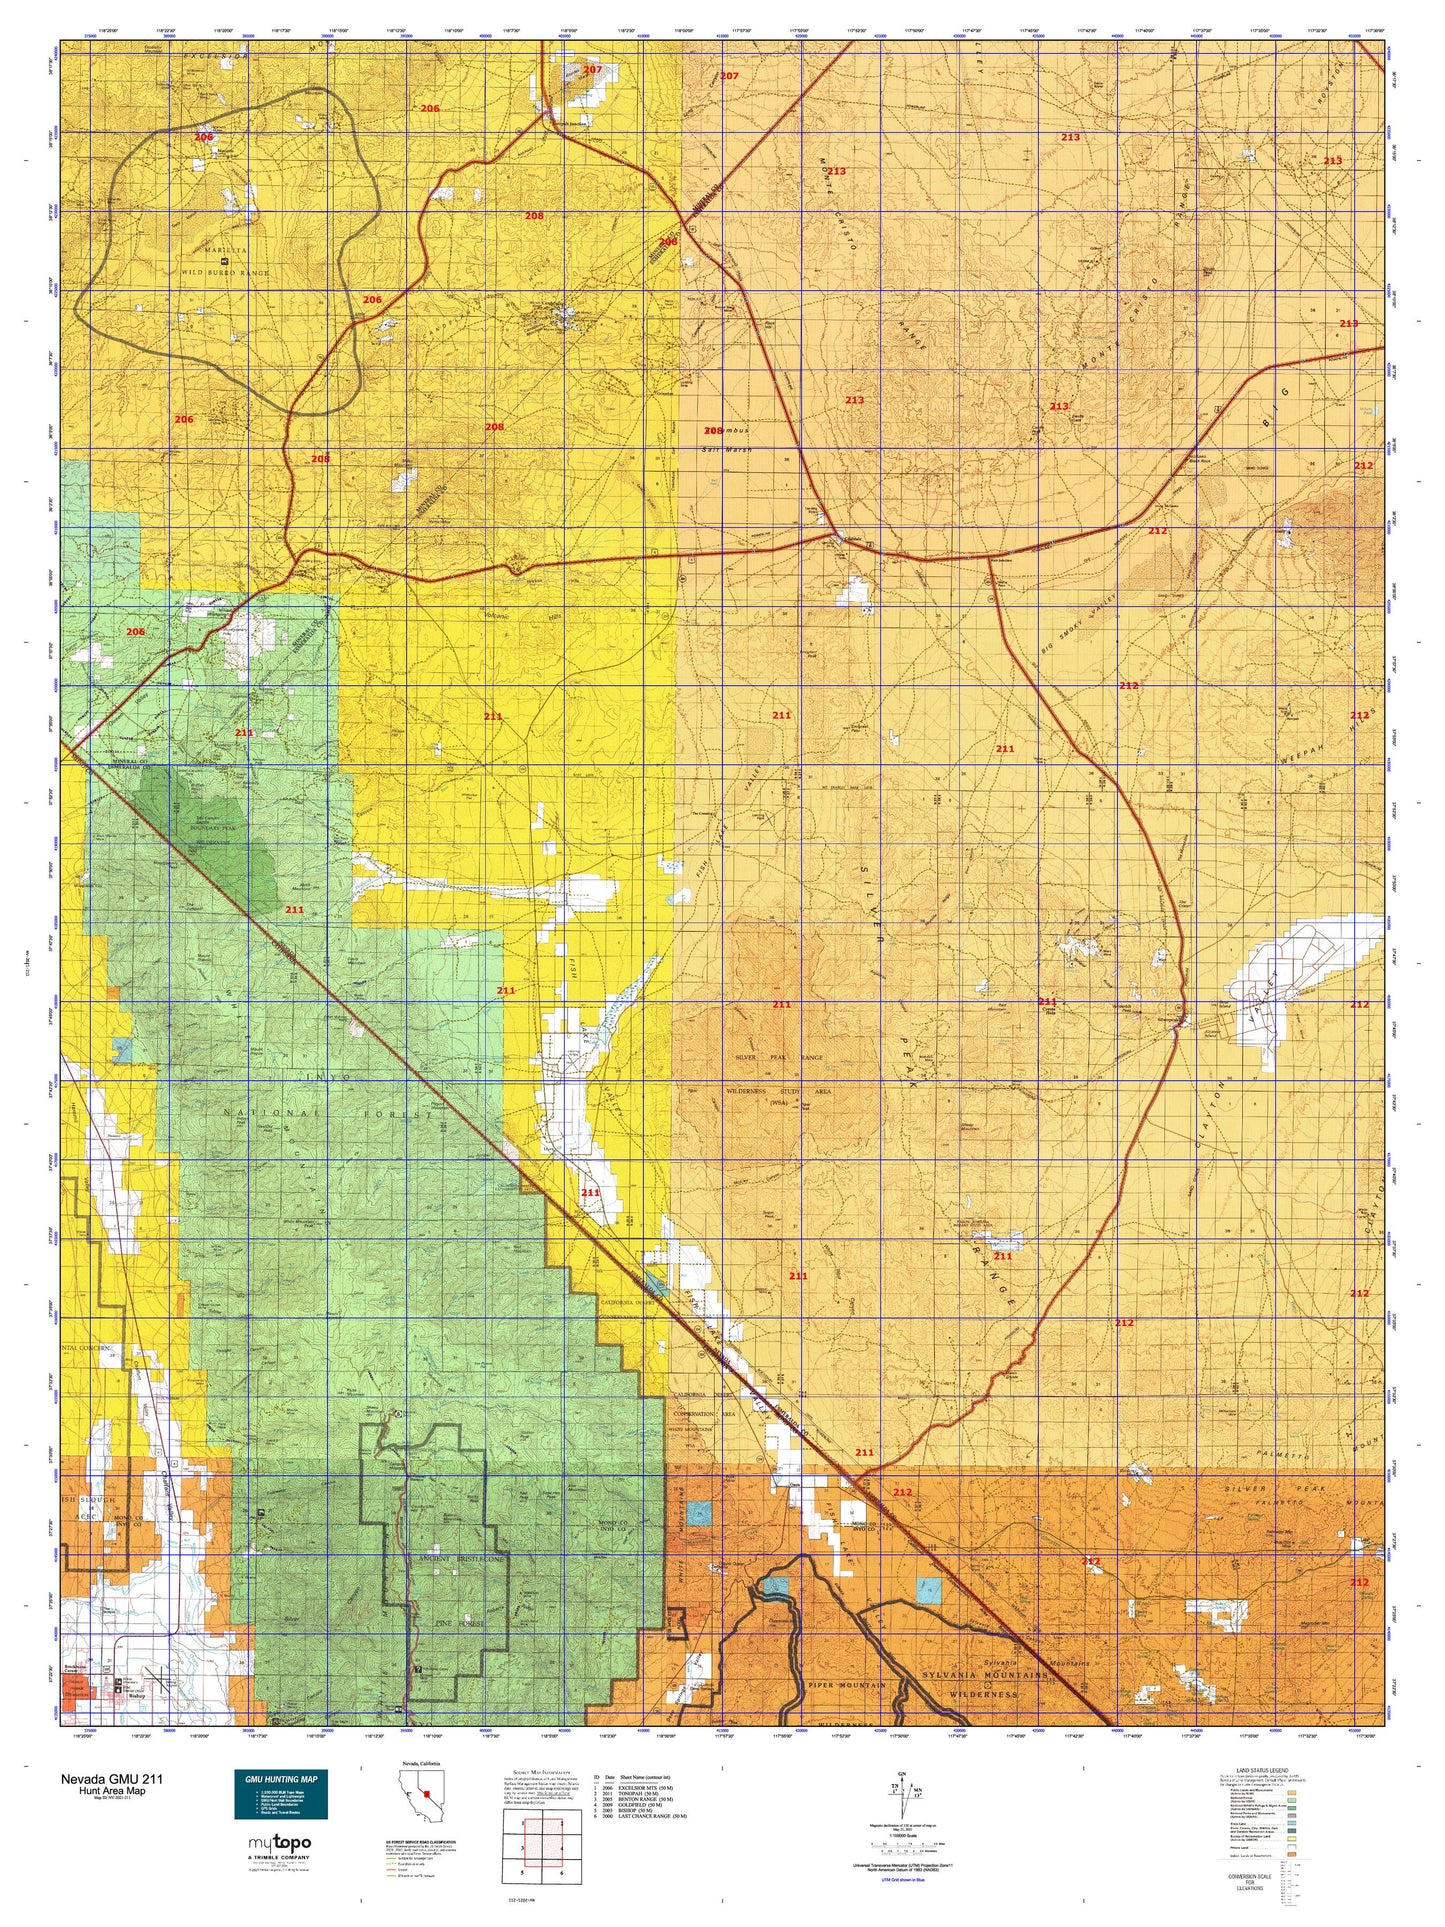 Nevada GMU 211 Map Image